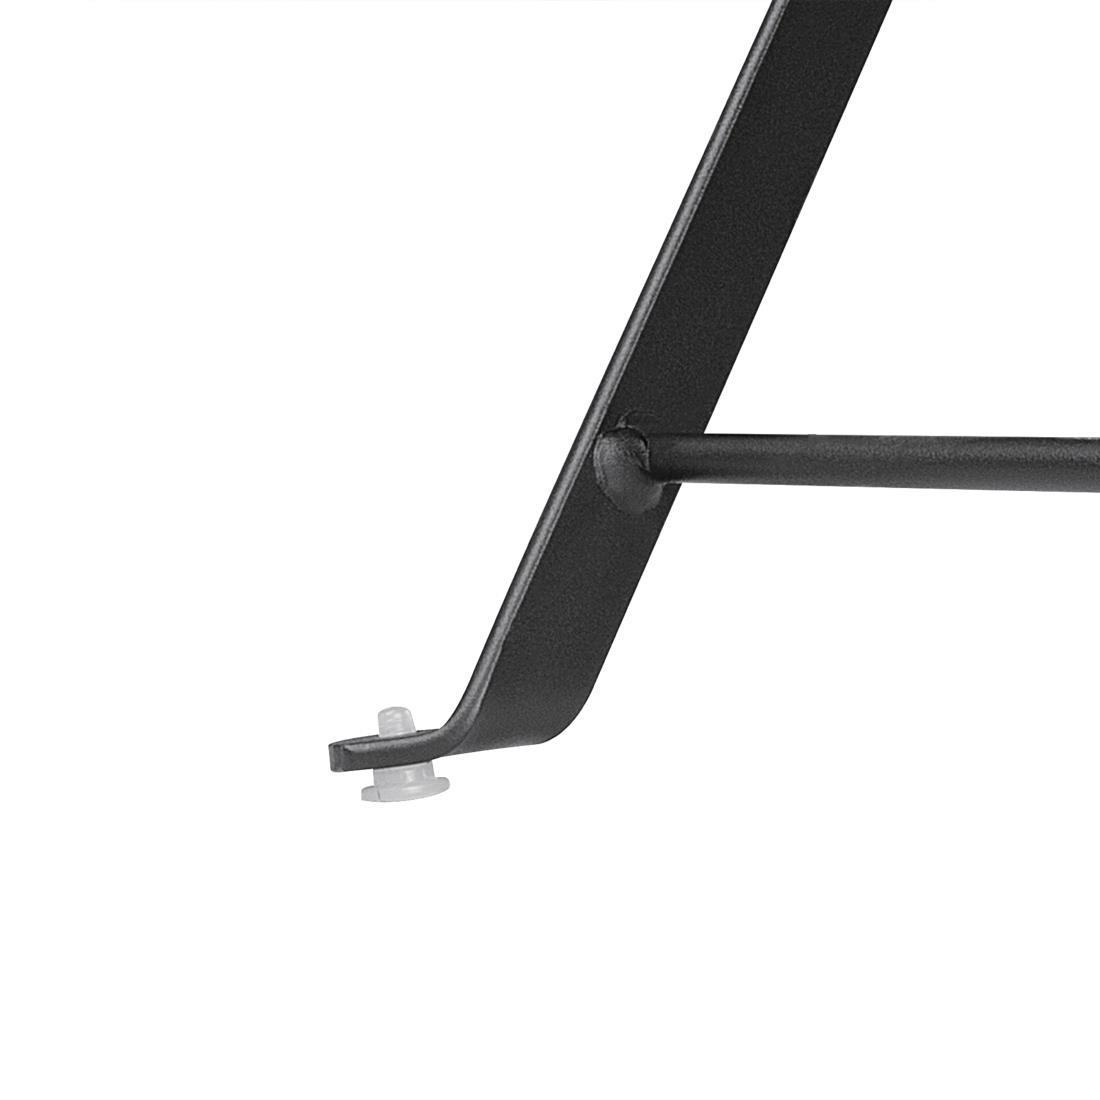 Bolero Black Square Pavement Style Steel Table - GK989  - 6